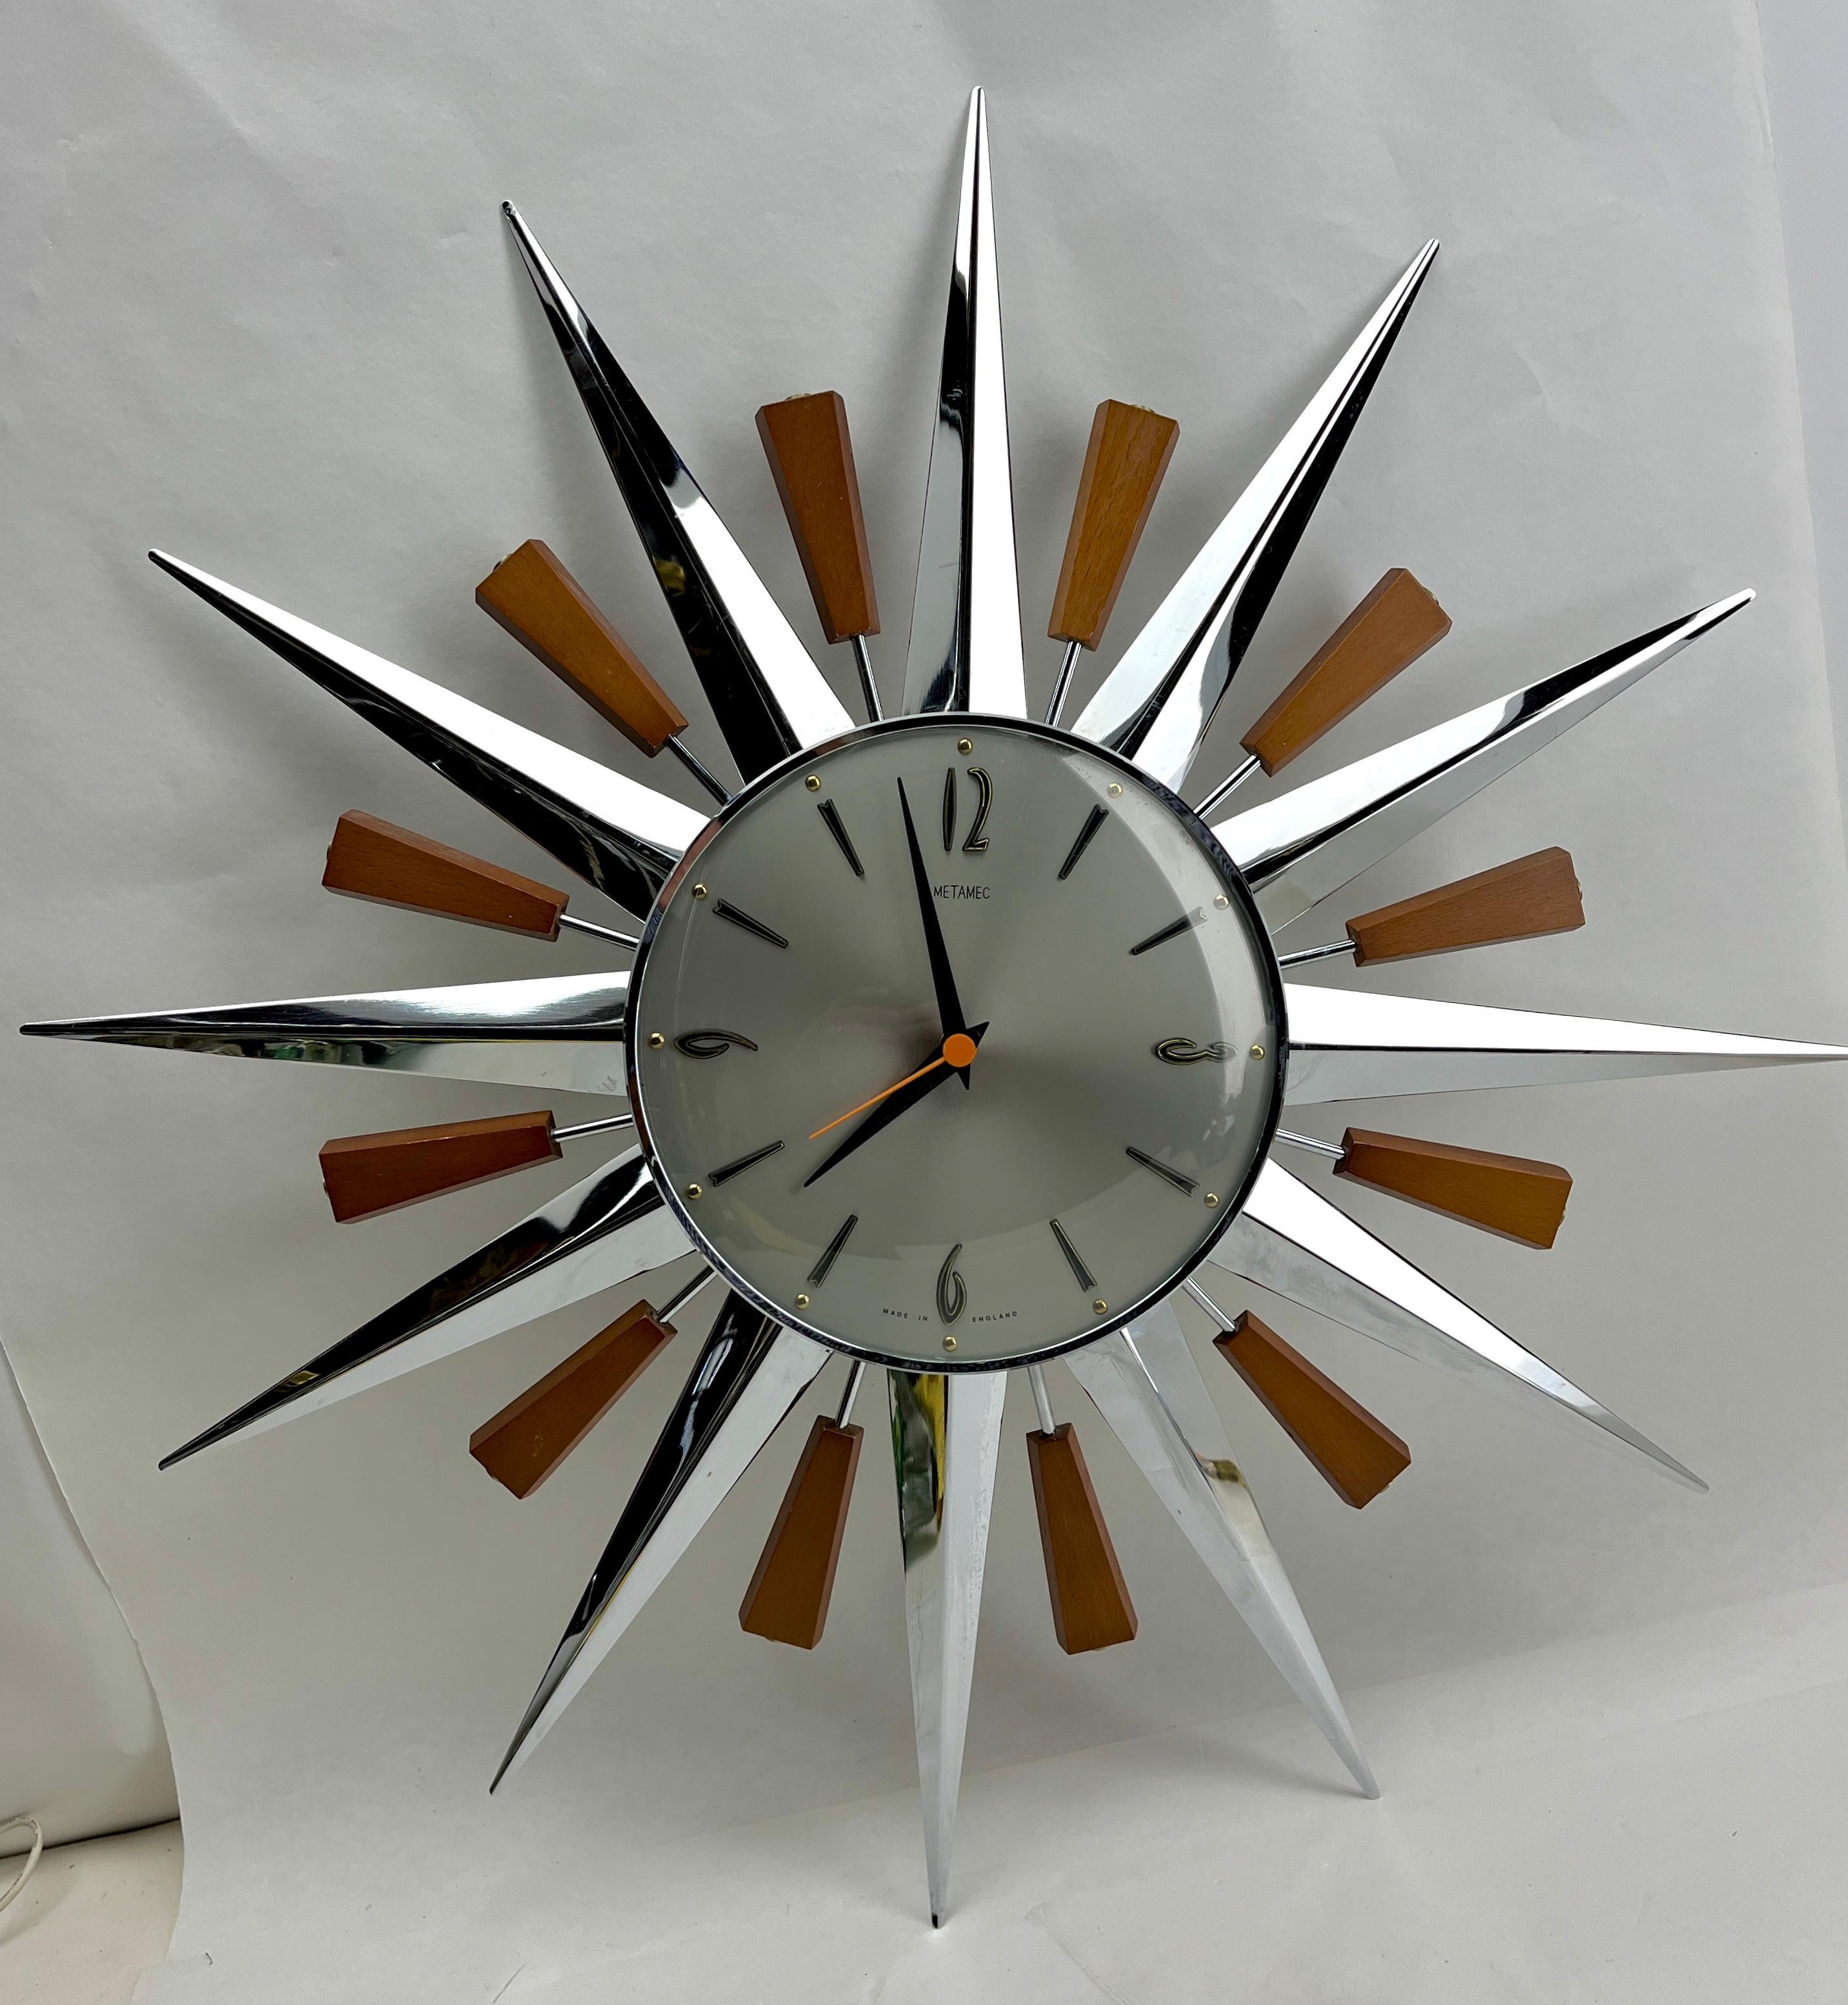 Machine-Made Vintage Metamec Starburst Wall Clock made in England 1970s